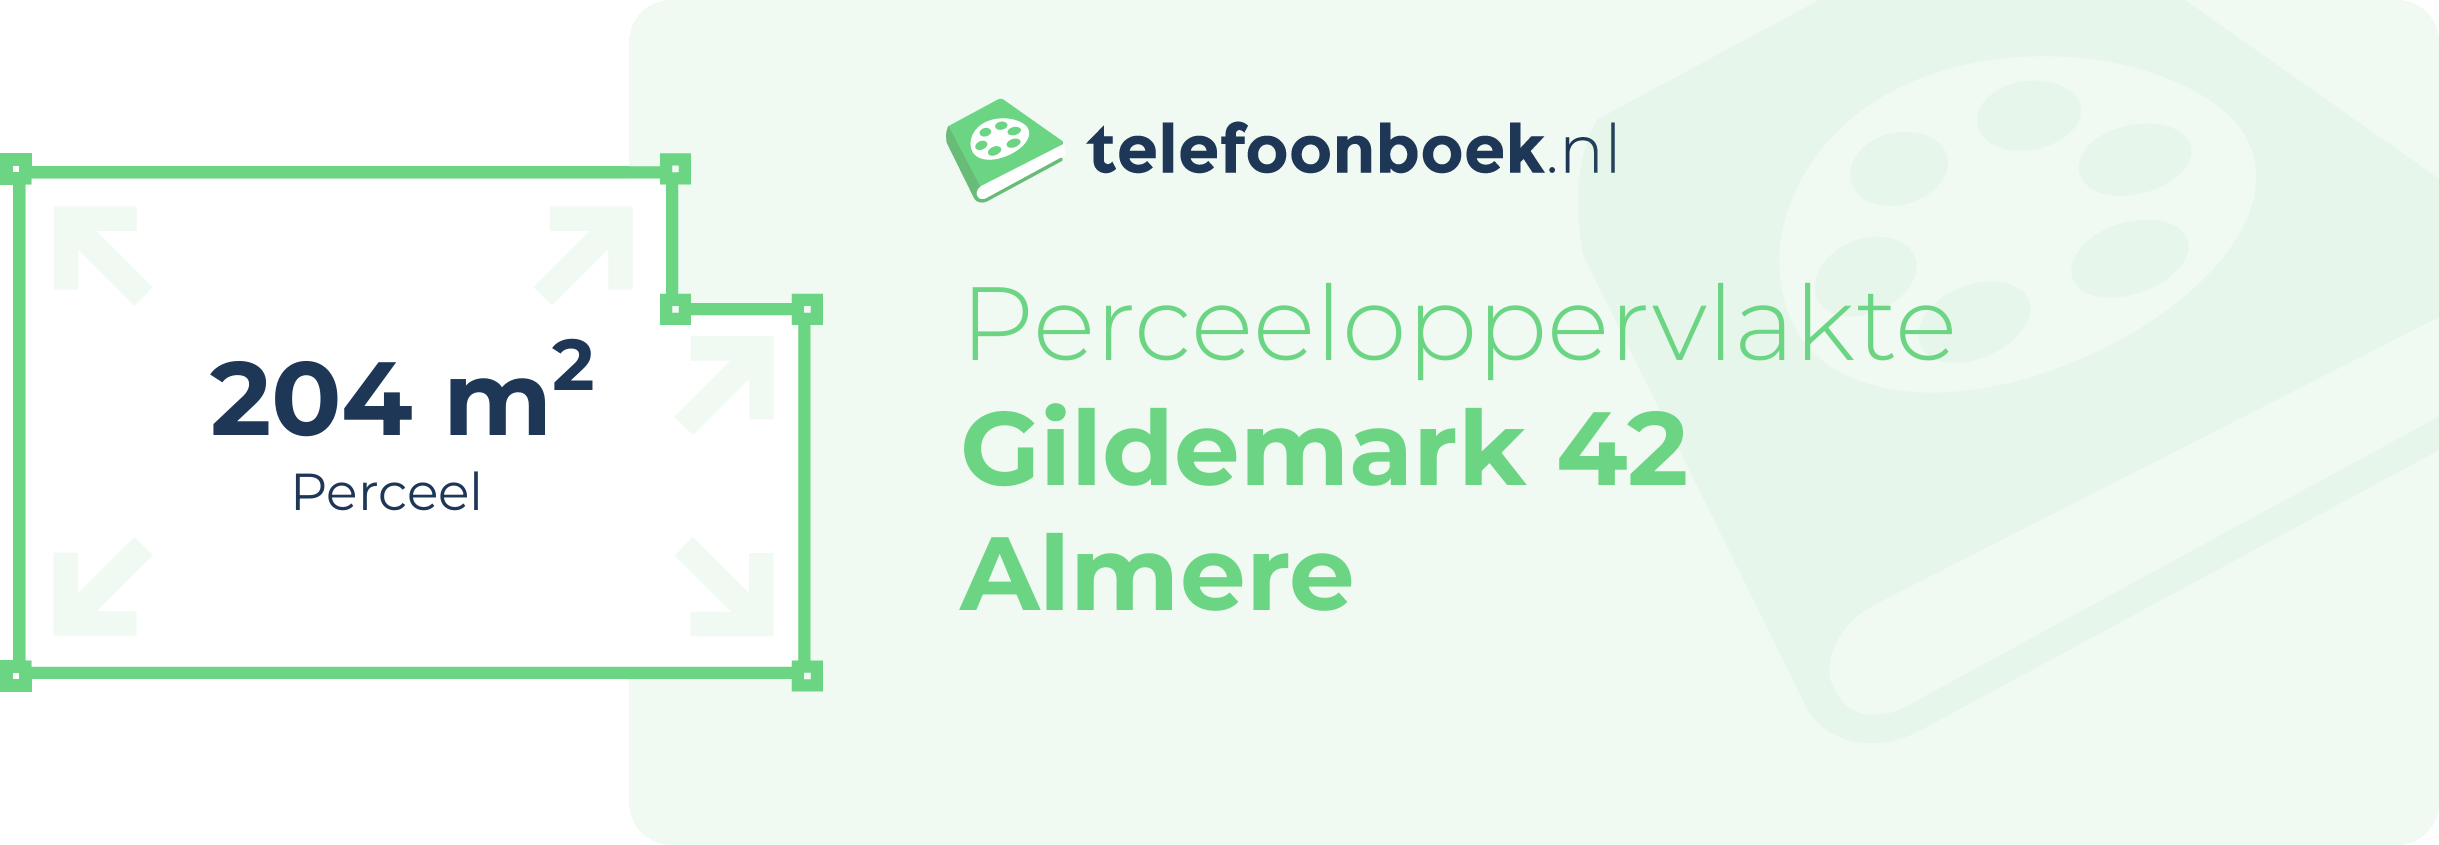 Perceeloppervlakte Gildemark 42 Almere